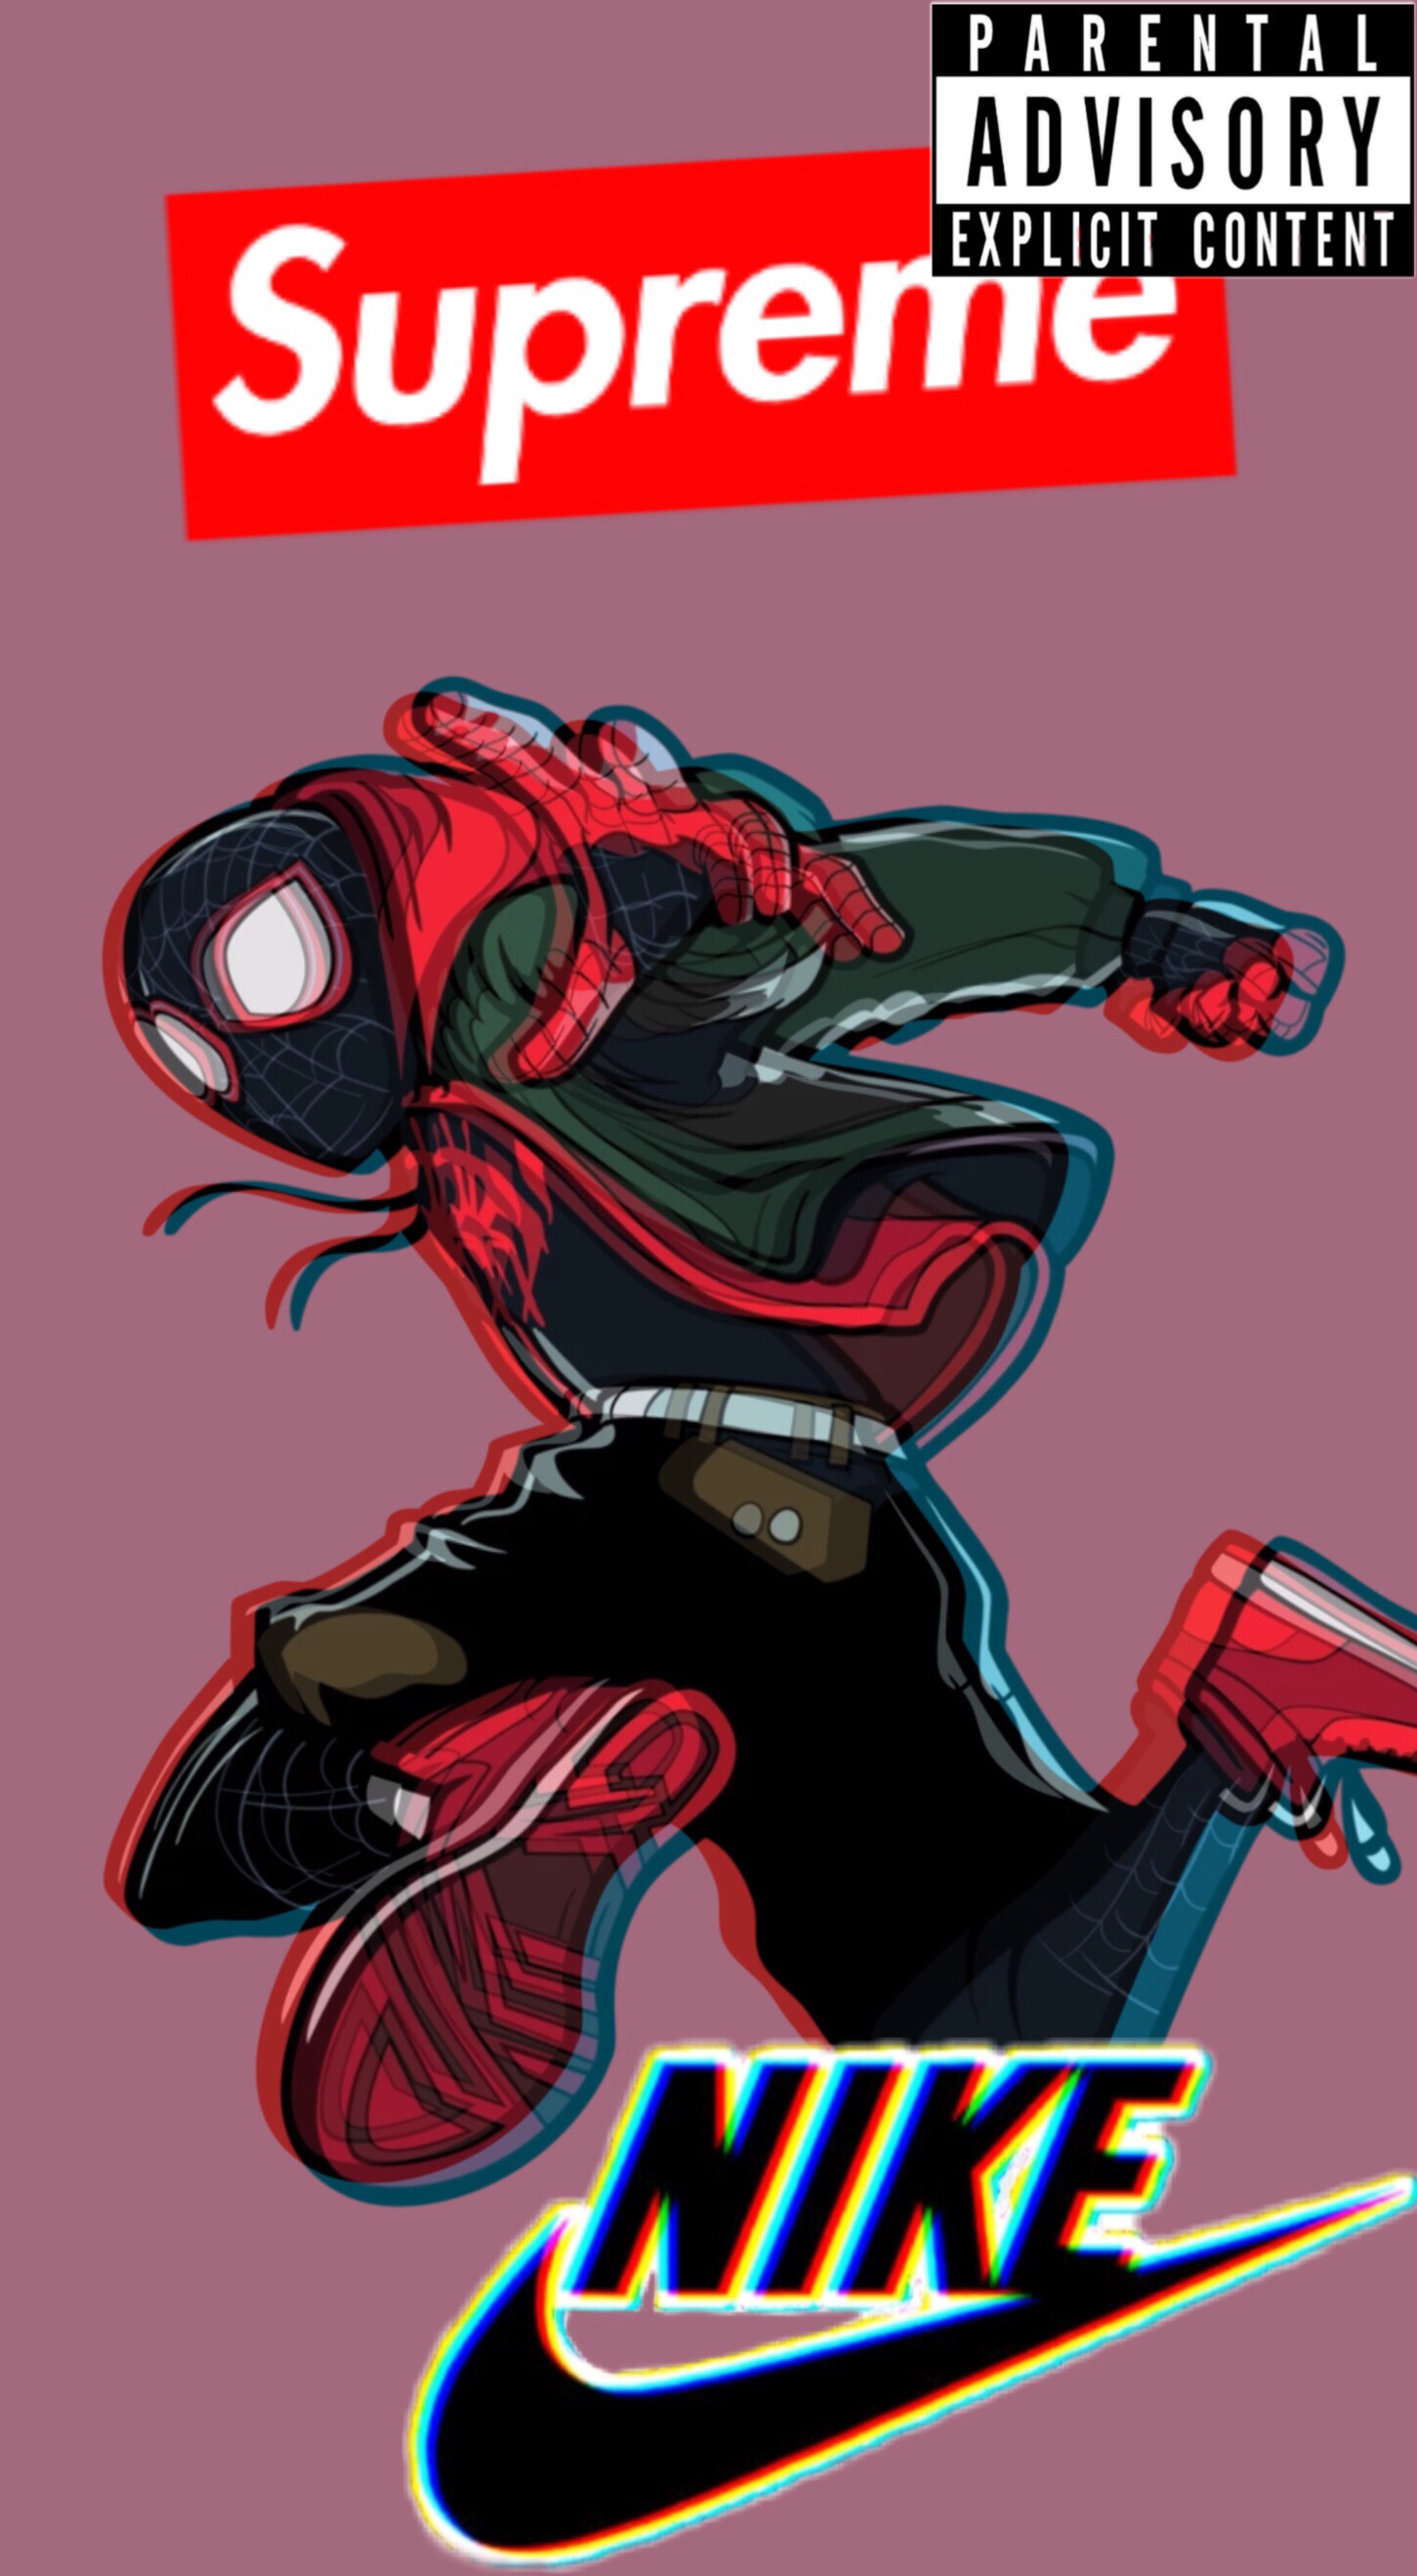 Spider Man Supreme Wallpapers